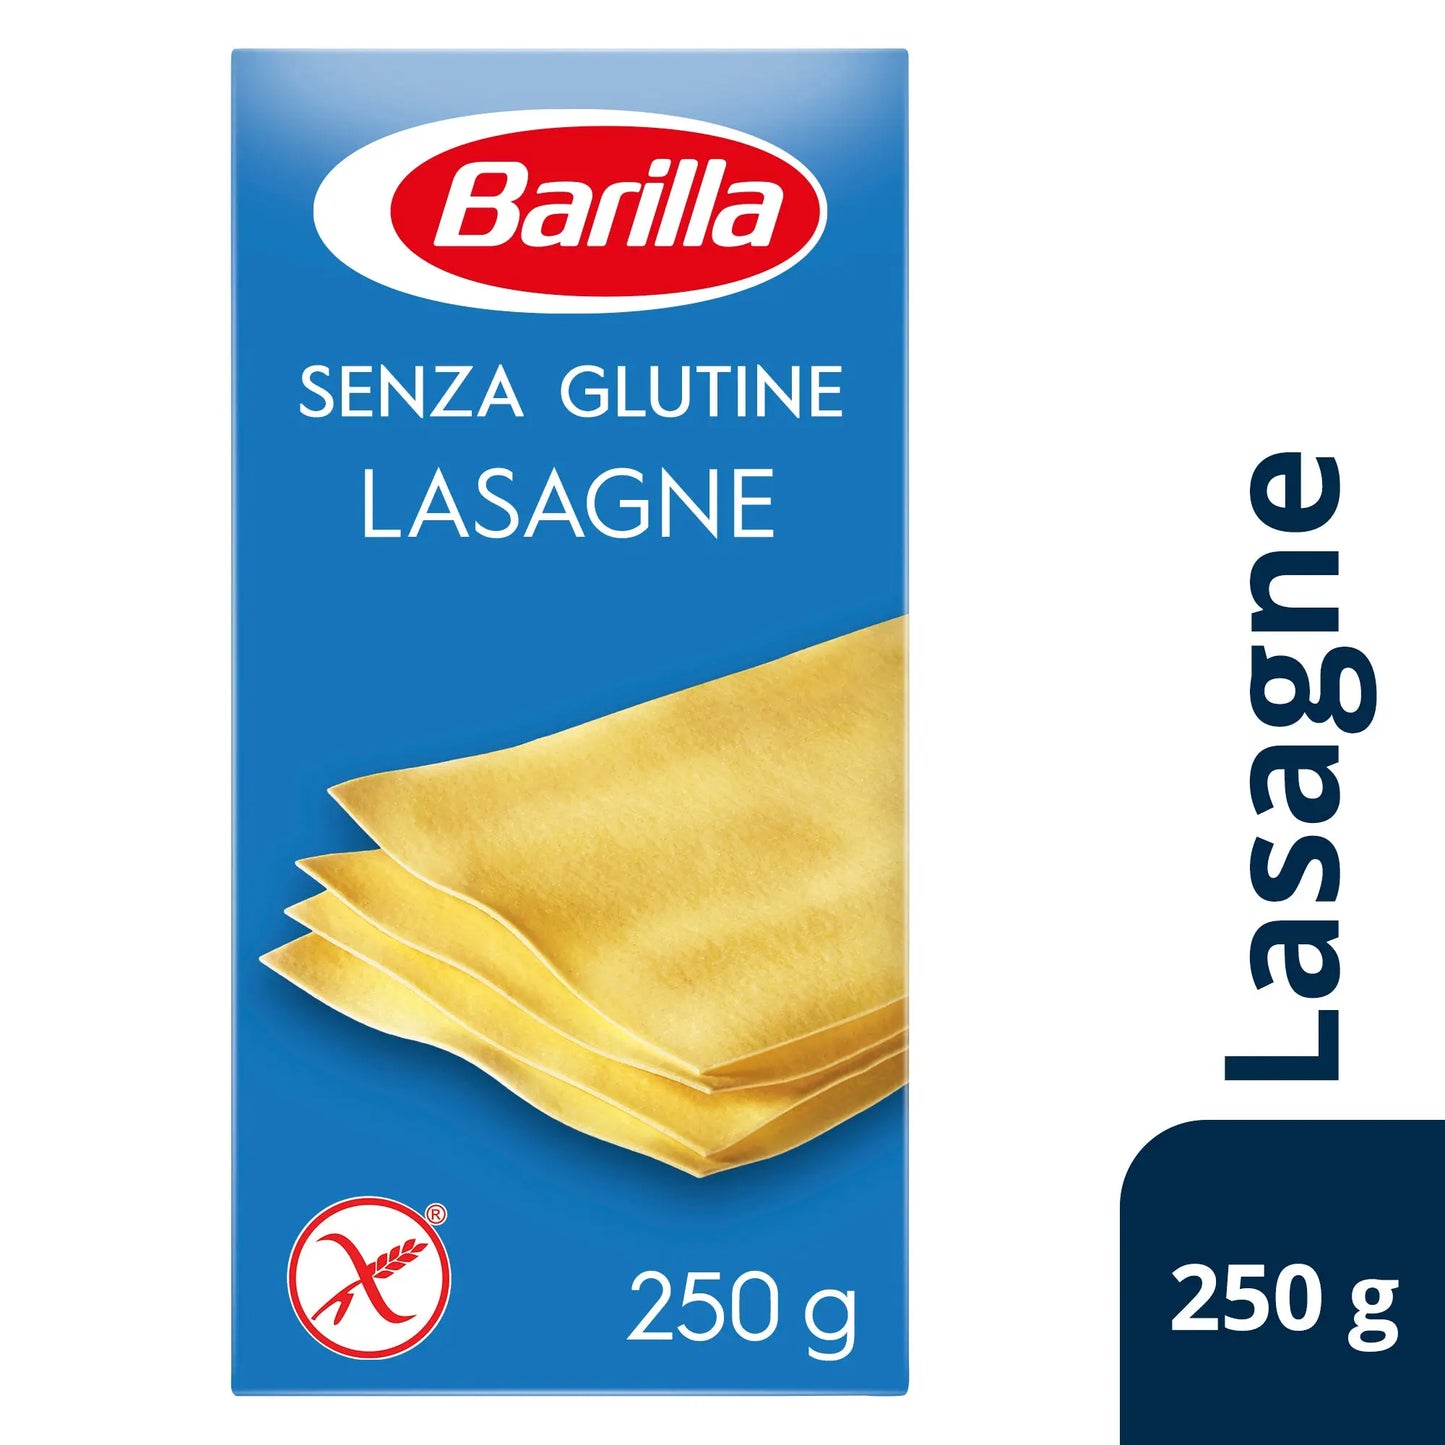 Barilla Pasta Lasagne Gluten Free 250g Barilla